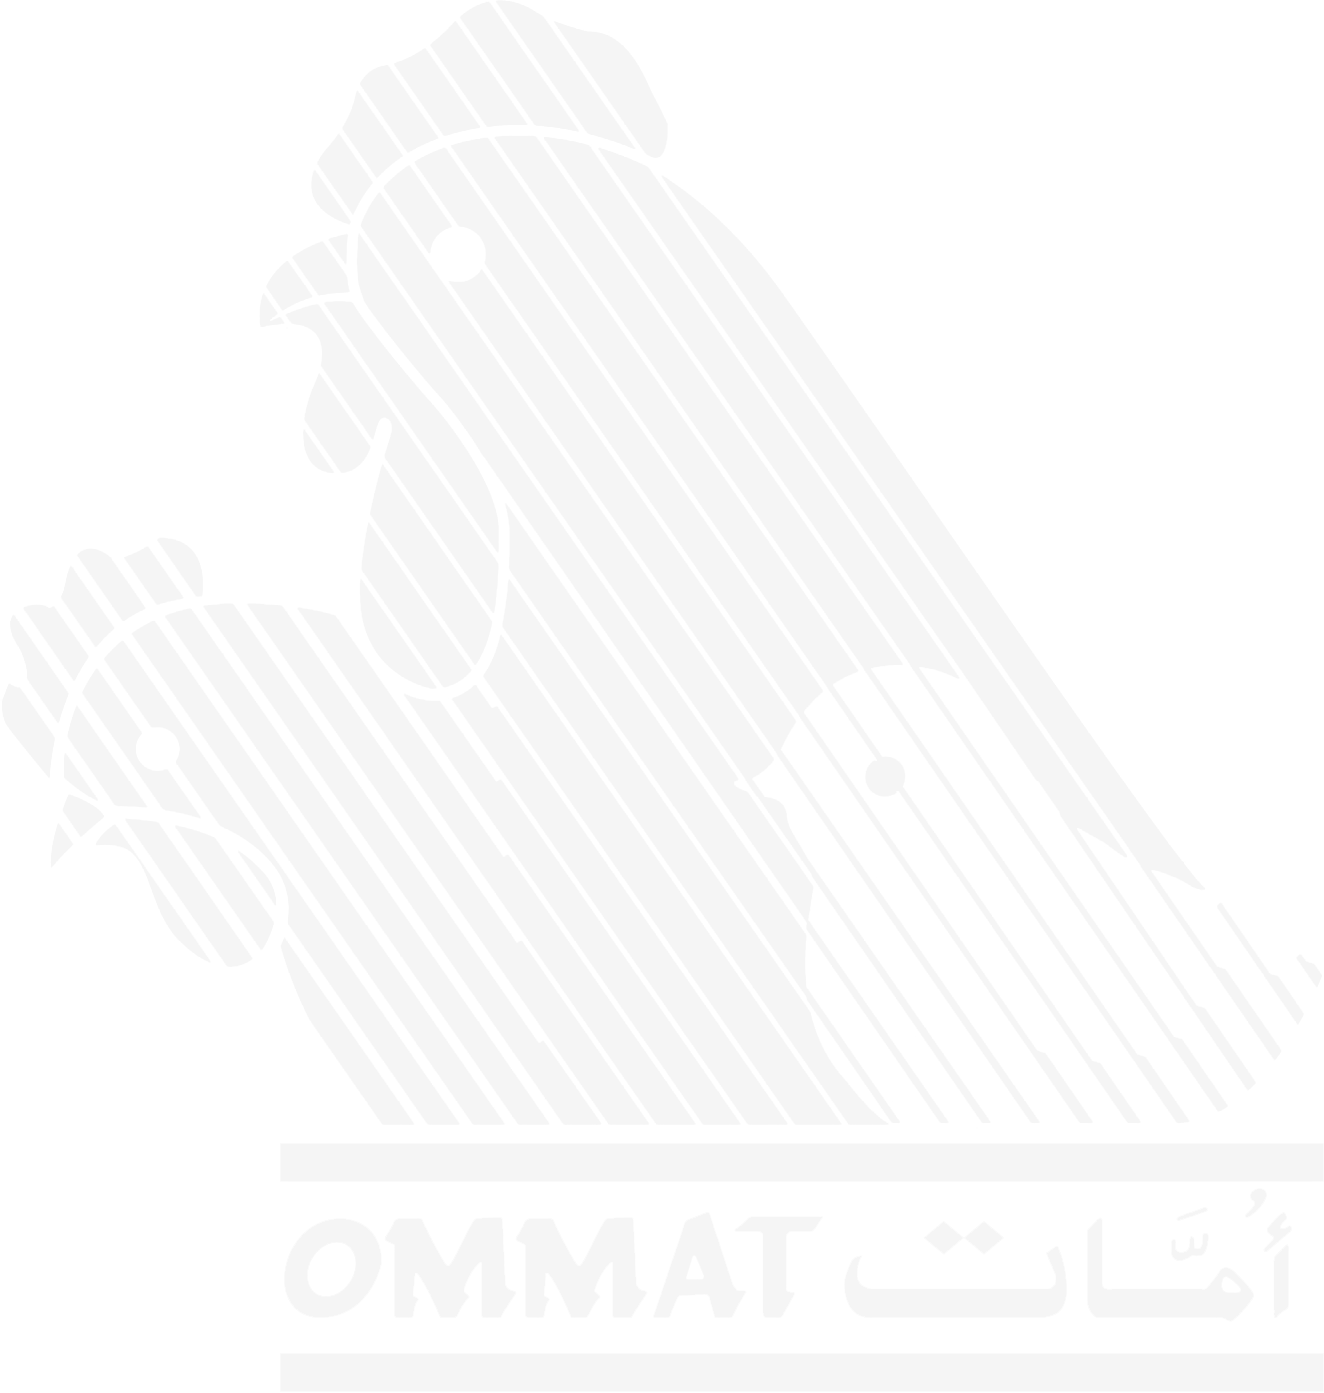 OMMAT Group